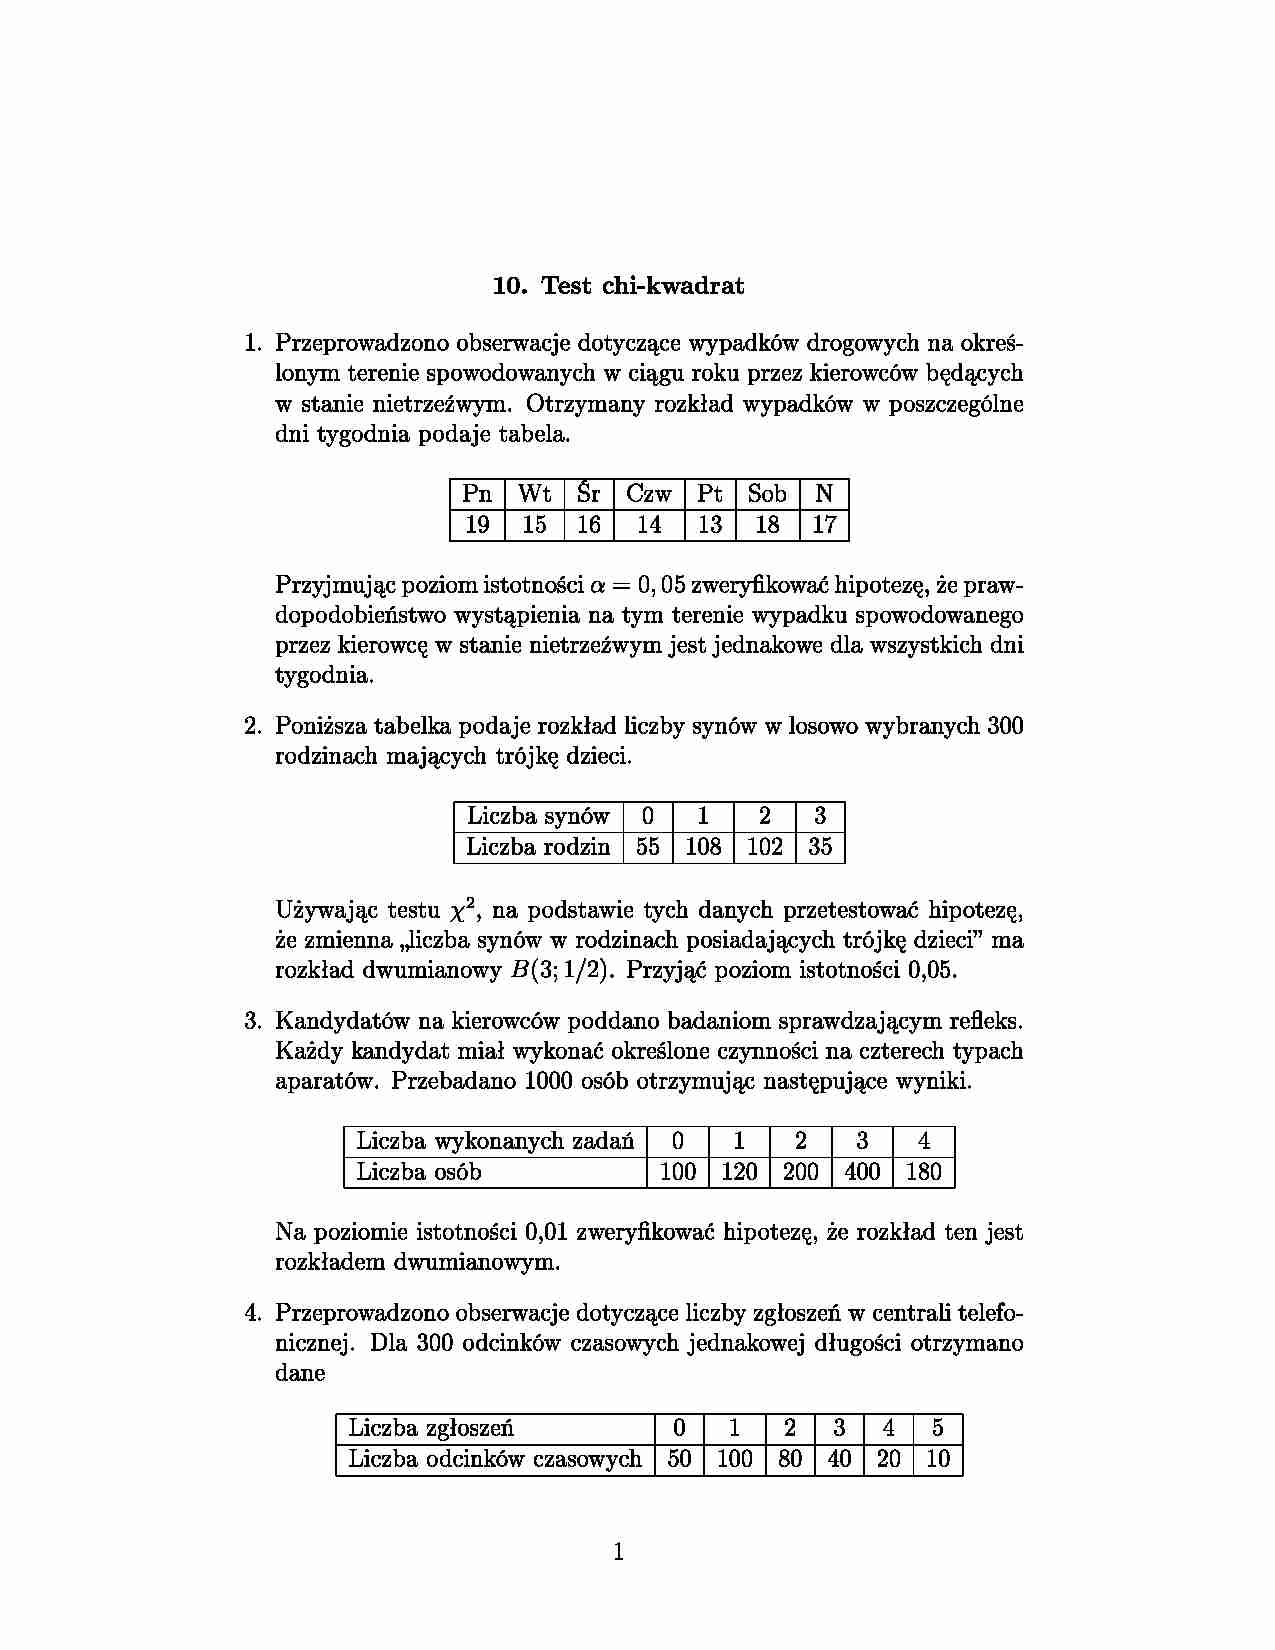 Test chi-kwadrat - strona 1